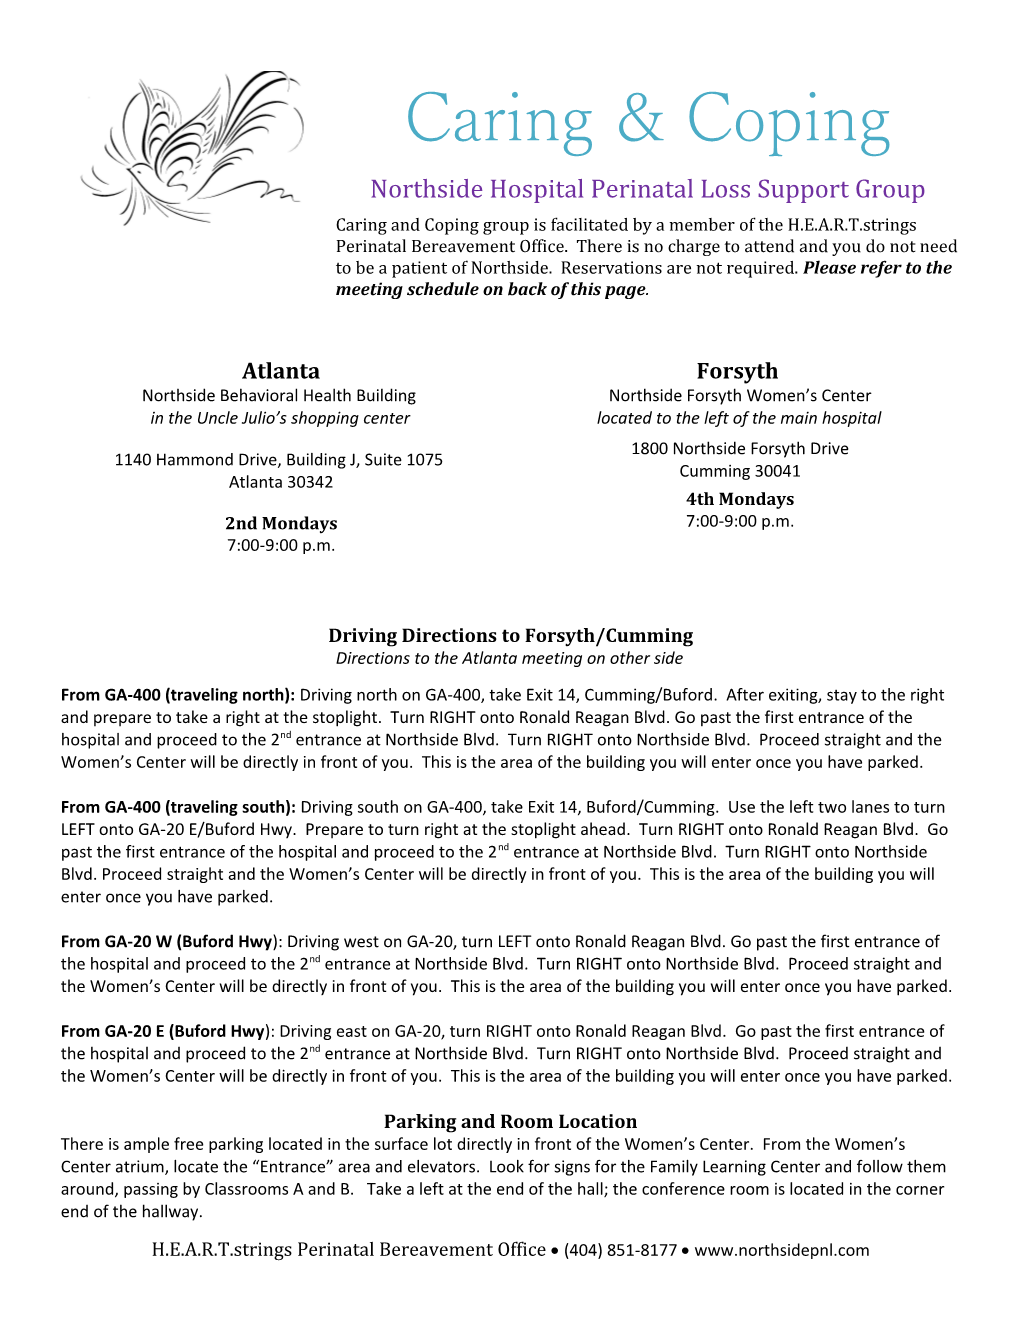 Northside Hospital Perinatal Loss Support Groups